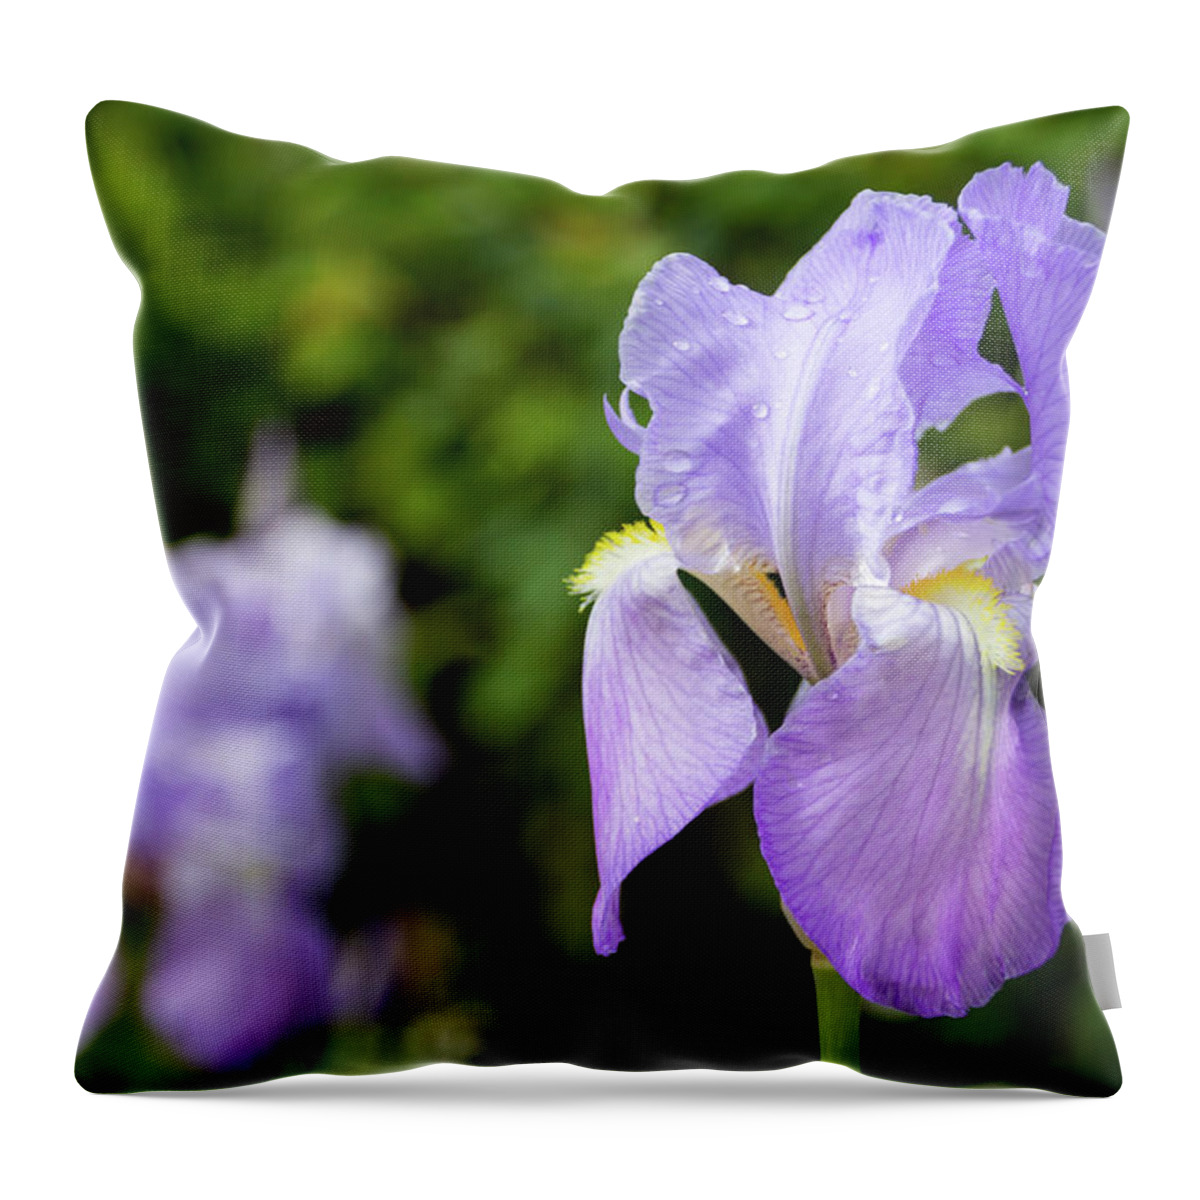 Iris Throw Pillow featuring the photograph Purple iris by Fabiano Di Paolo